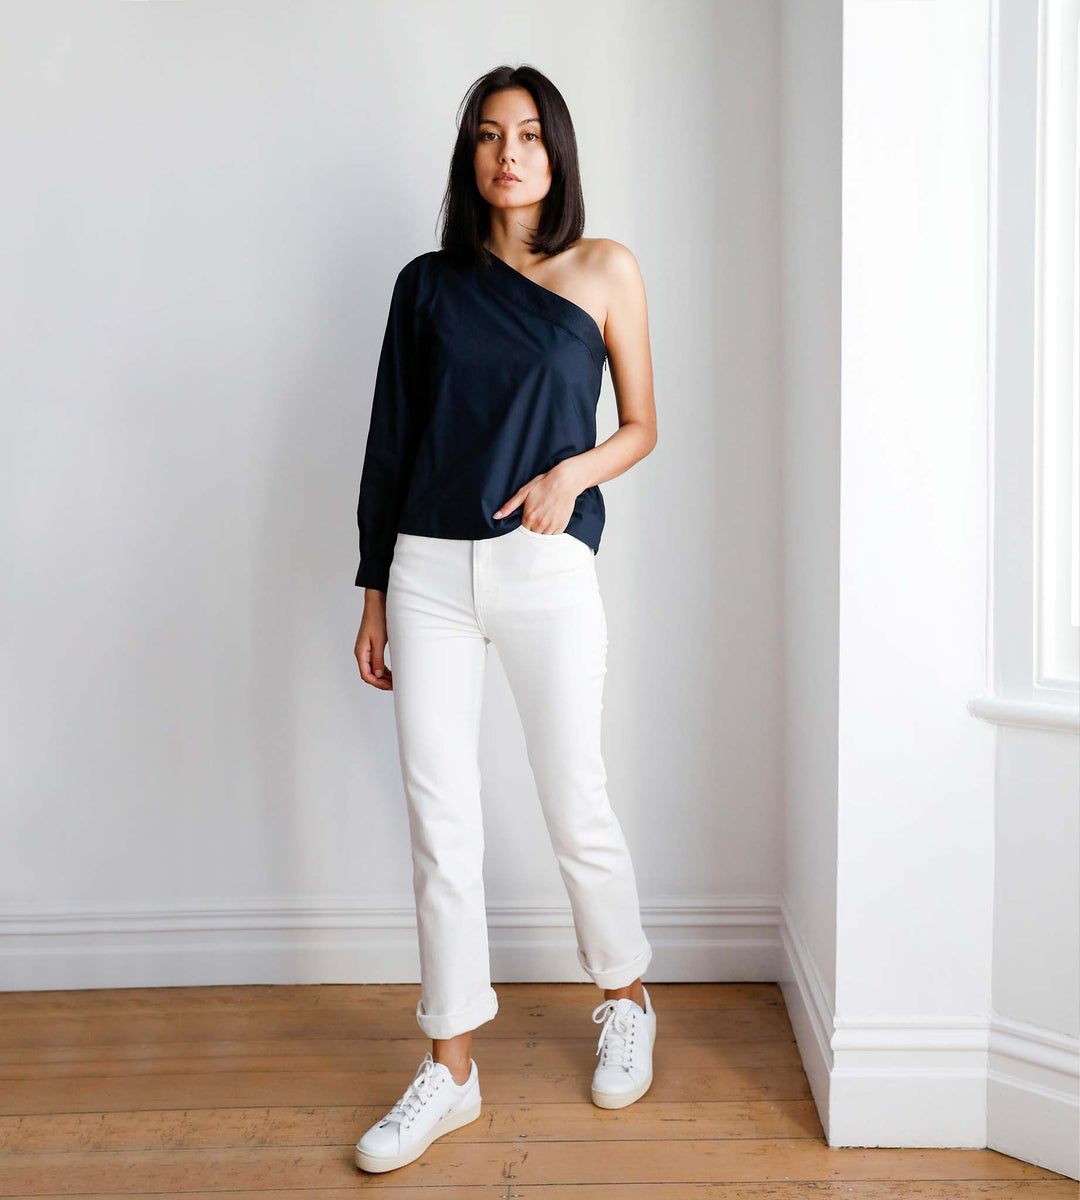 Jeanerica | Women's Eiffel 5-Pocket Jeans | Natural White